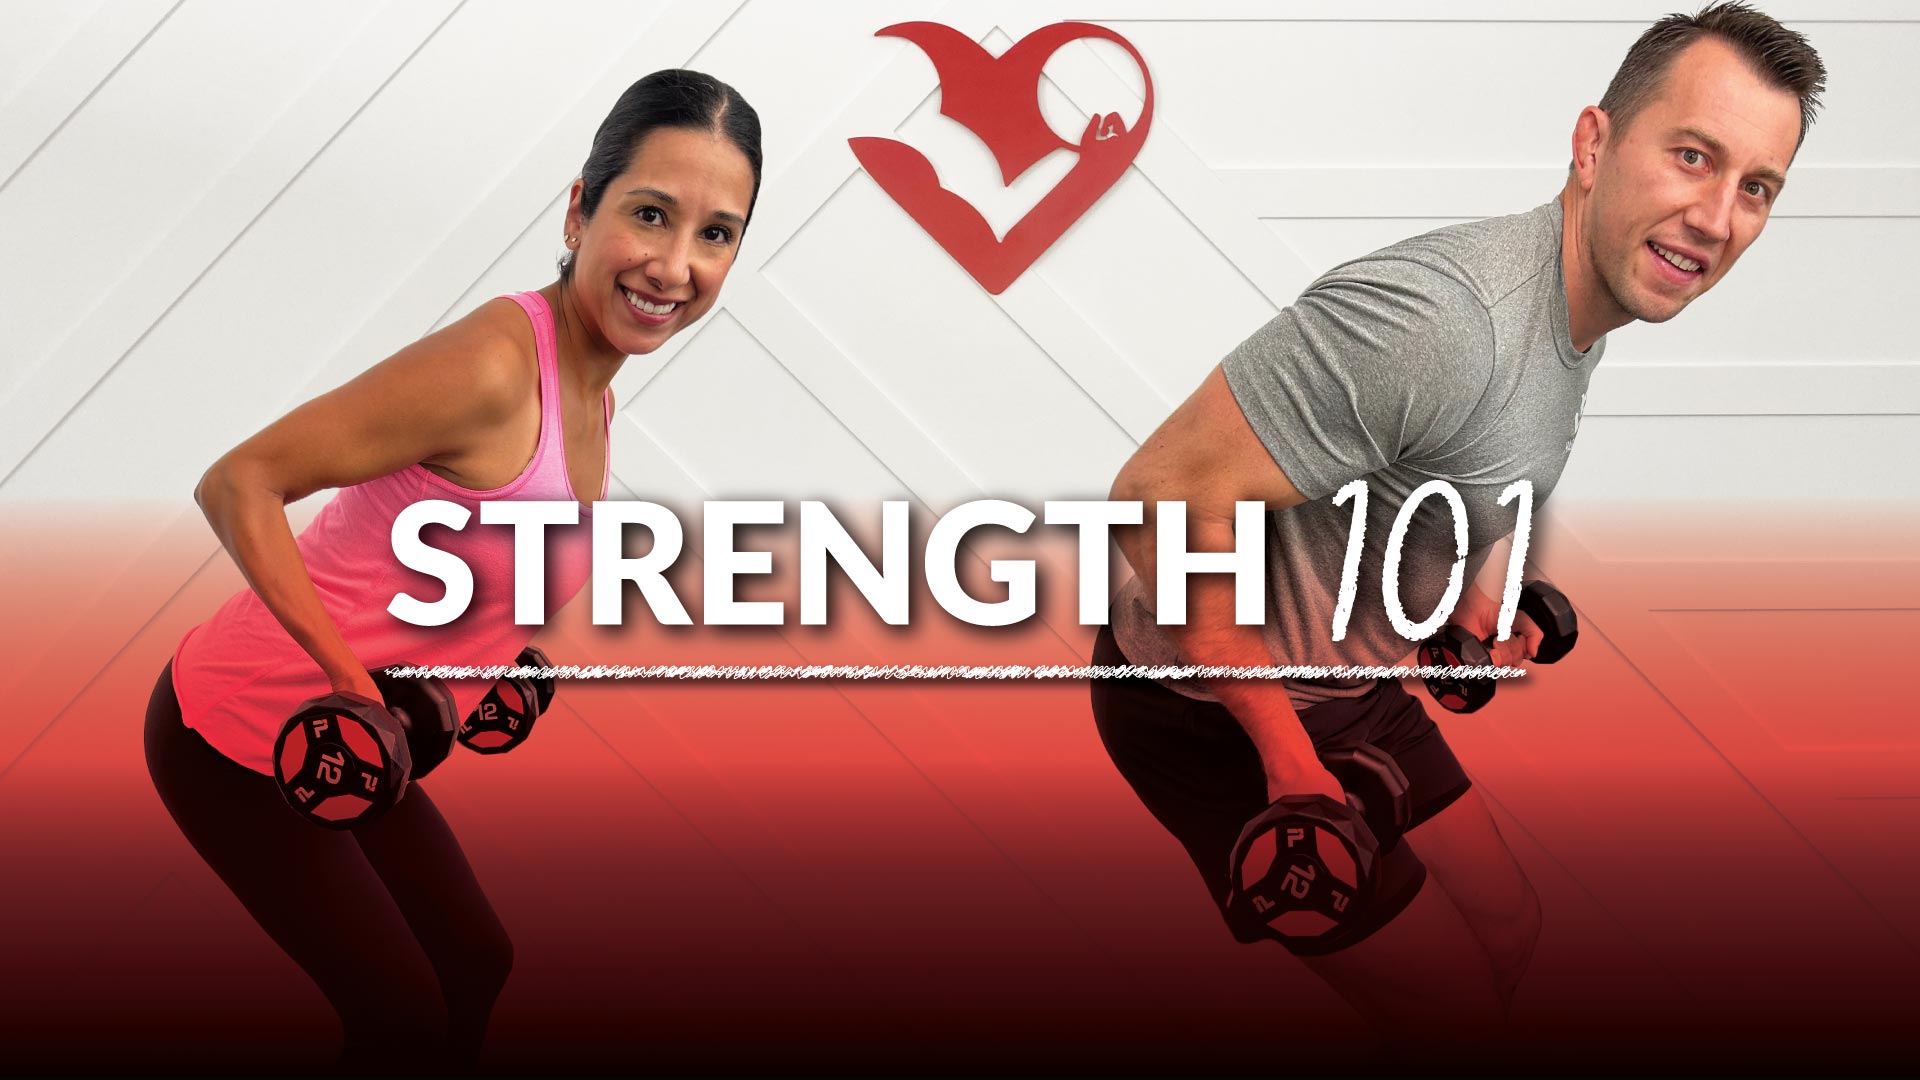 Strength 101 - 30 Day Strength Training for Beginners